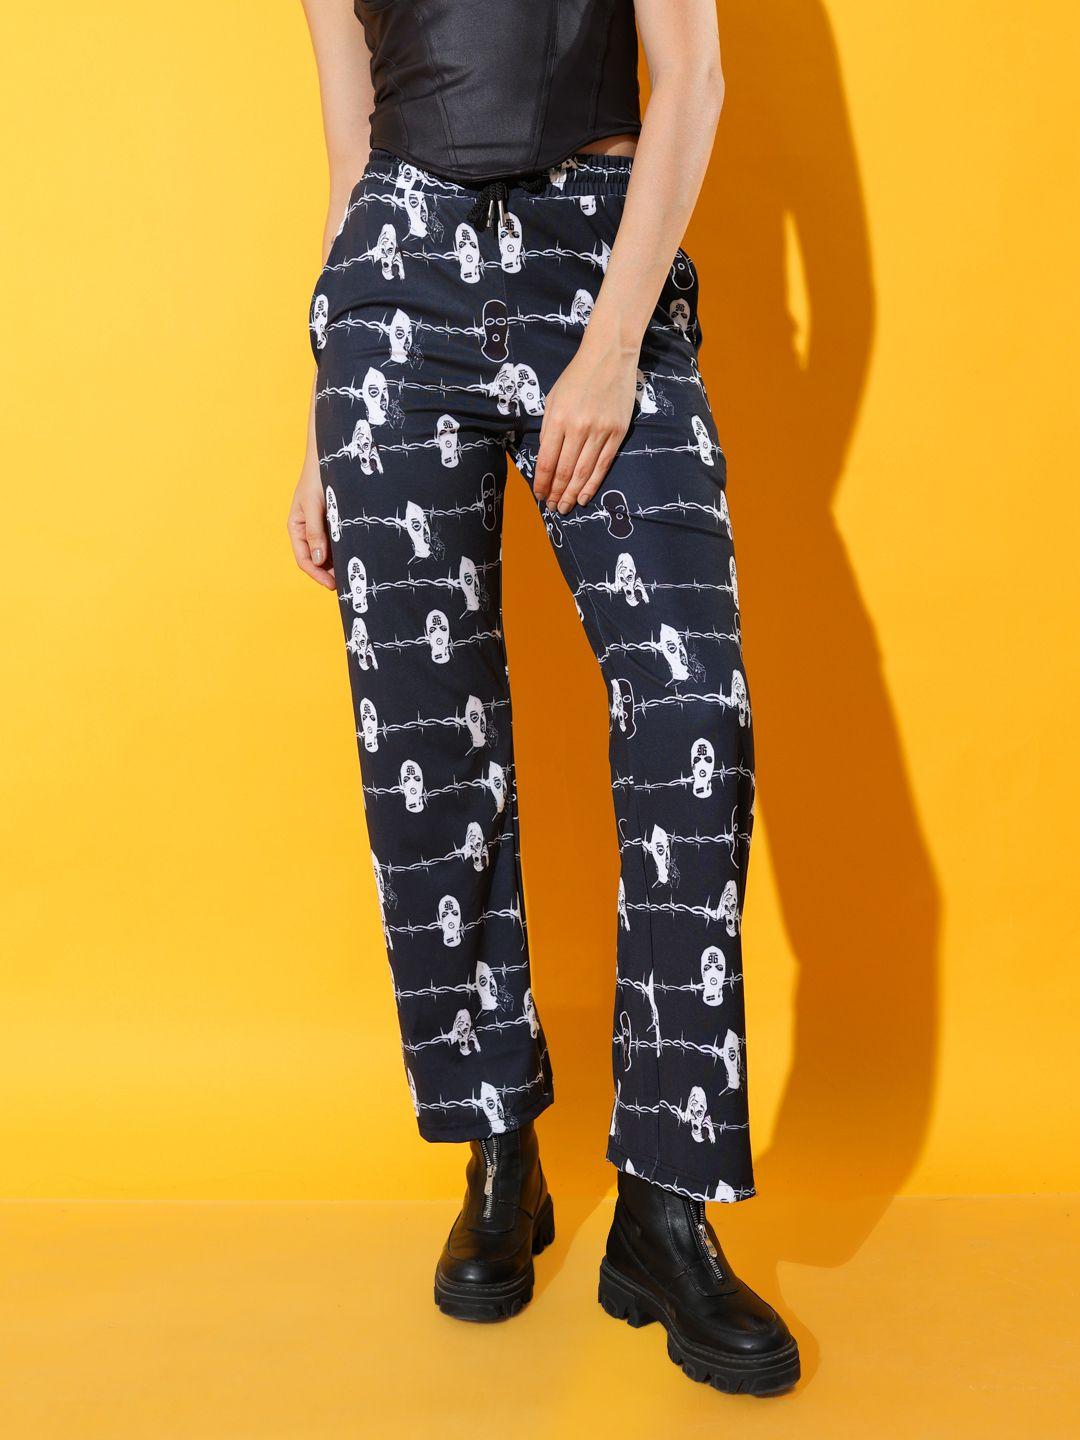 stylecast x hersheinbox monochrome printed trousers